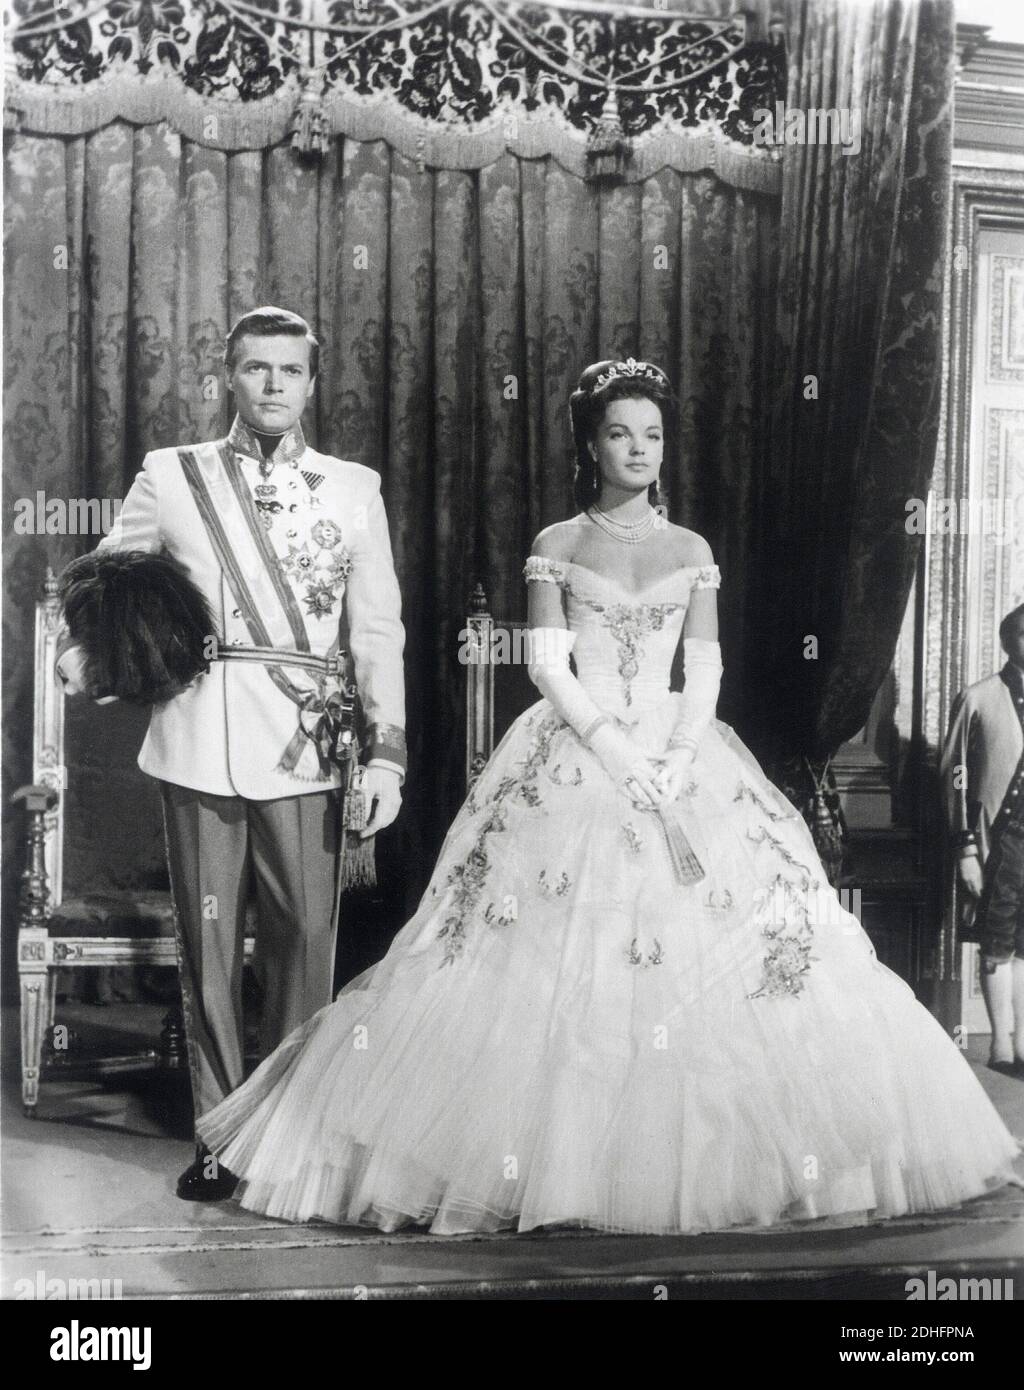 1955 , AUSTRIA :  The movie actress  ROMY  SCHNEIDER ( 1938 - 1982 ) as the Queen of Hungry and  Empress SISSI  Elisabeth Absburg of Austria in   '  Sissi  '  by Ernst Marischka , KARL HEINZ BOHM as the Kaiser Franz Josef  - ATTRICE - MOVIE - FILM - CINEMA - ASBURGO - ABSBURGO -  portrait - ritratto  -  tiara - corona - crown - diamanti - diamonds - diamante - diamond - jewellery - jewel - jewels - gioiello - gioielli  - scollatura - neckline - neckopening  - military uniform uniforme militare - medals - decorations - lace - collana di perle - pearls - pearl - perla  - medaglia - medaglie - de Stock Photo